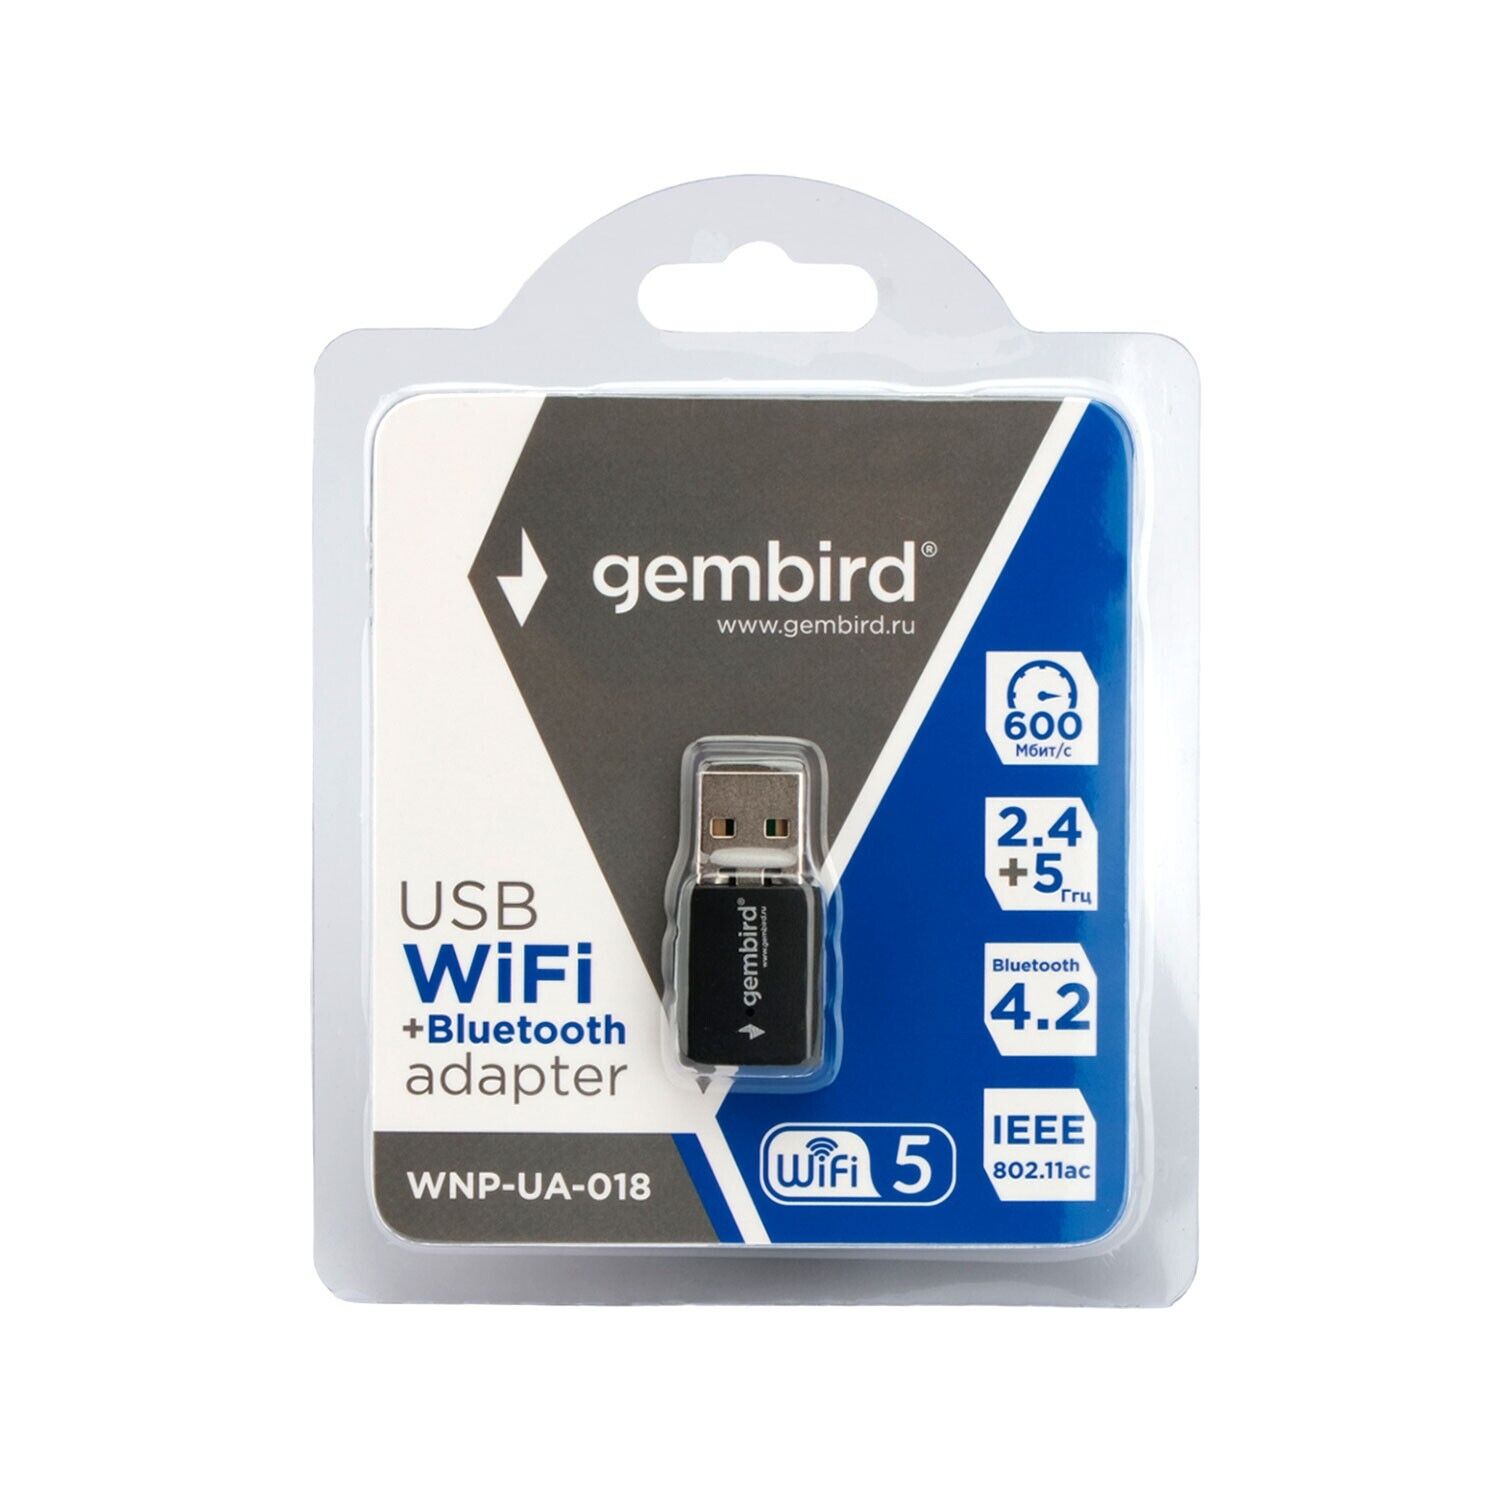 Сетевой адаптер WiFi+Bluetooth, двухдиапазонный мини, 600 Мбит, USB, 802.11b/a/g/n WNP-UA-018 Gembird 3